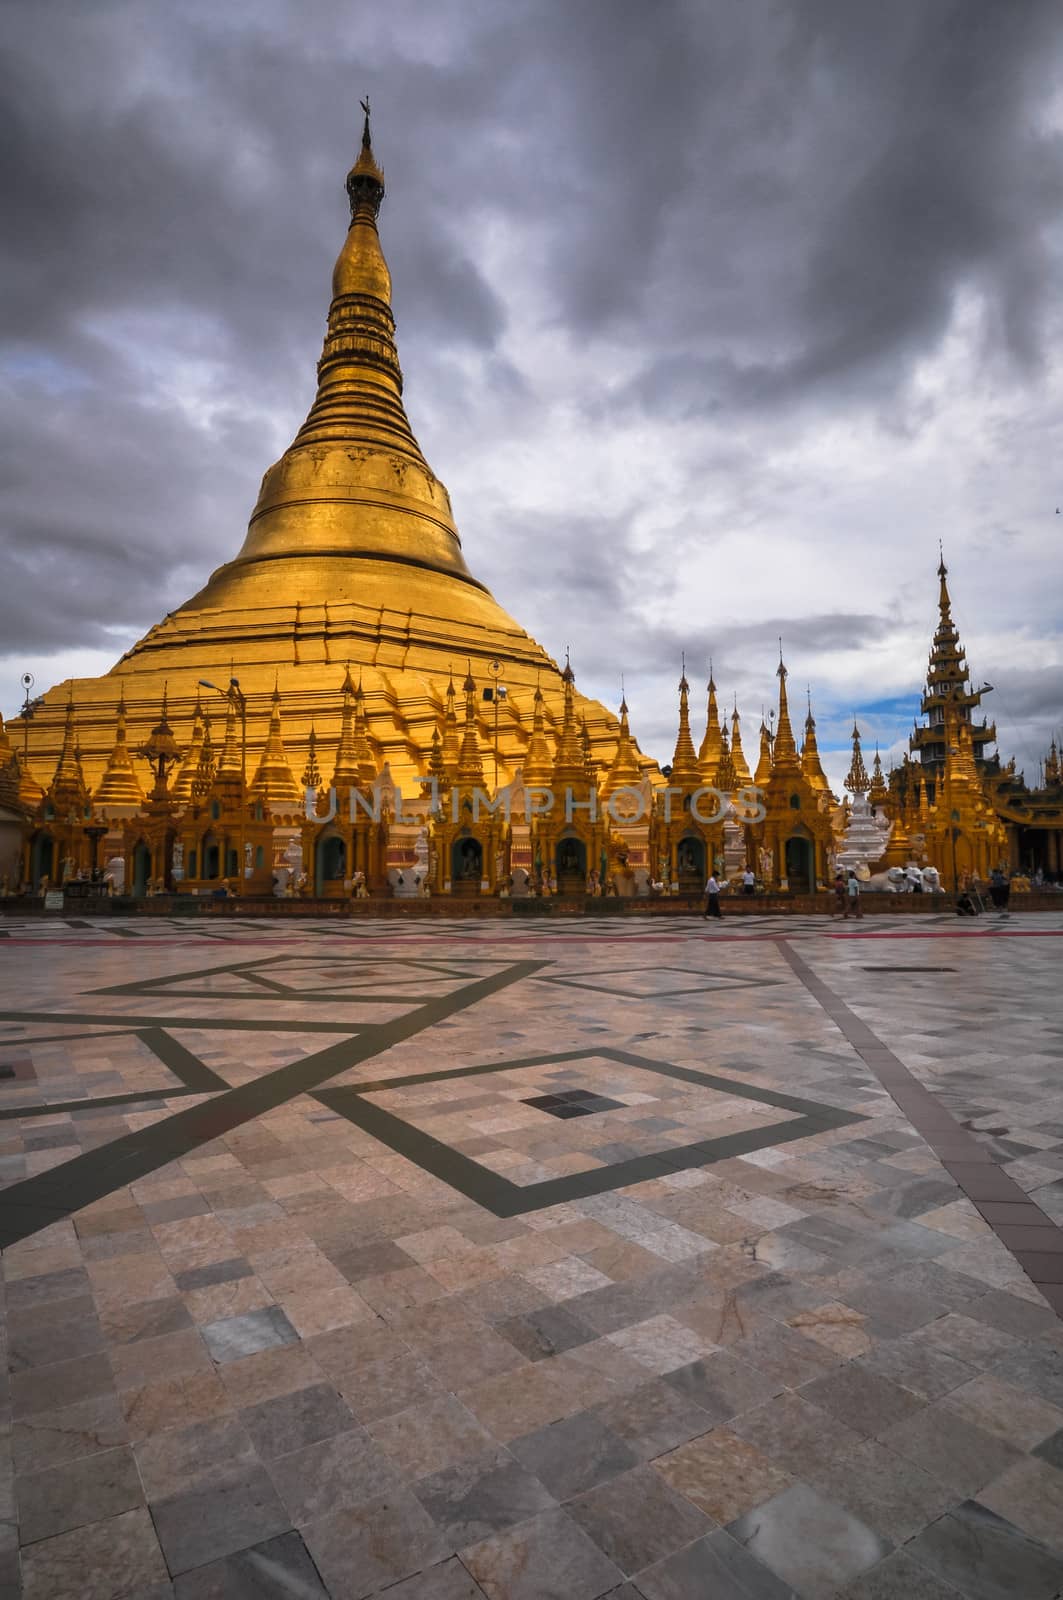 Shwedagon Pagoda Temple shining in the beautiful sunset in Yango by weltreisendertj